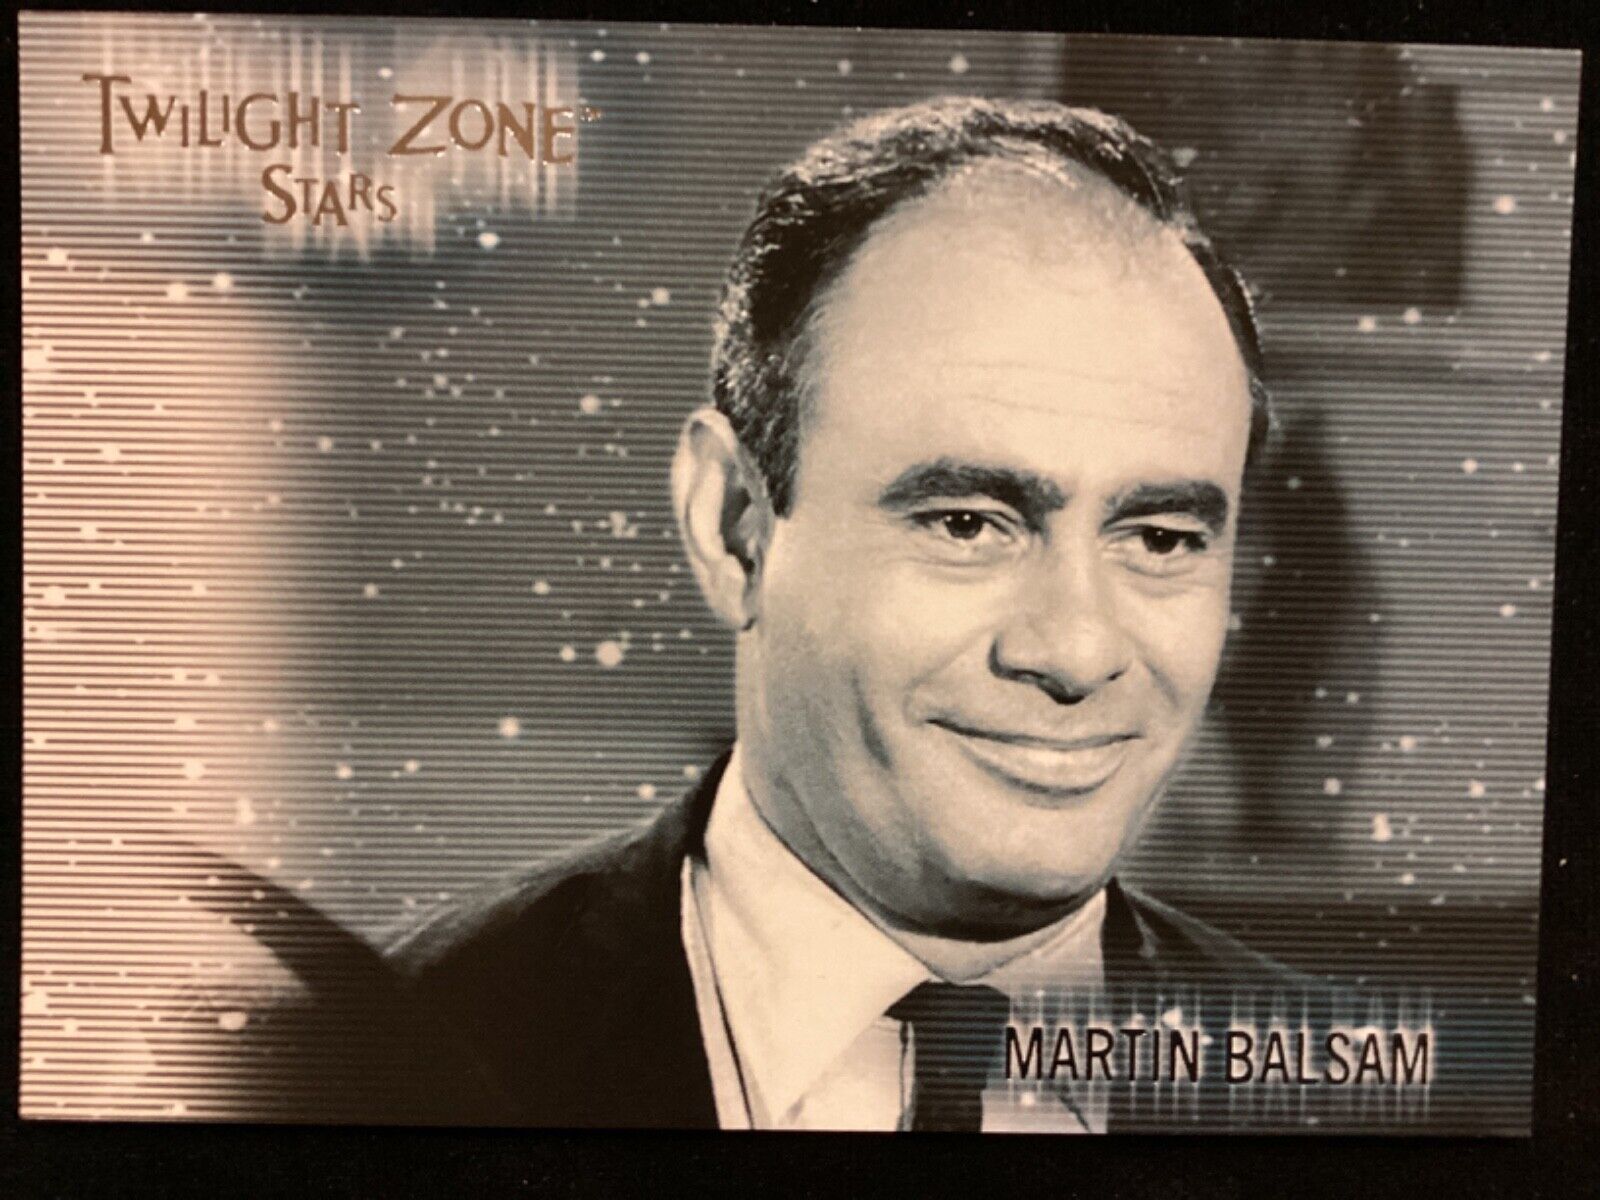 TWILIGHT ZONE ARCHIVES STARS MARTIN BALSAM CARD